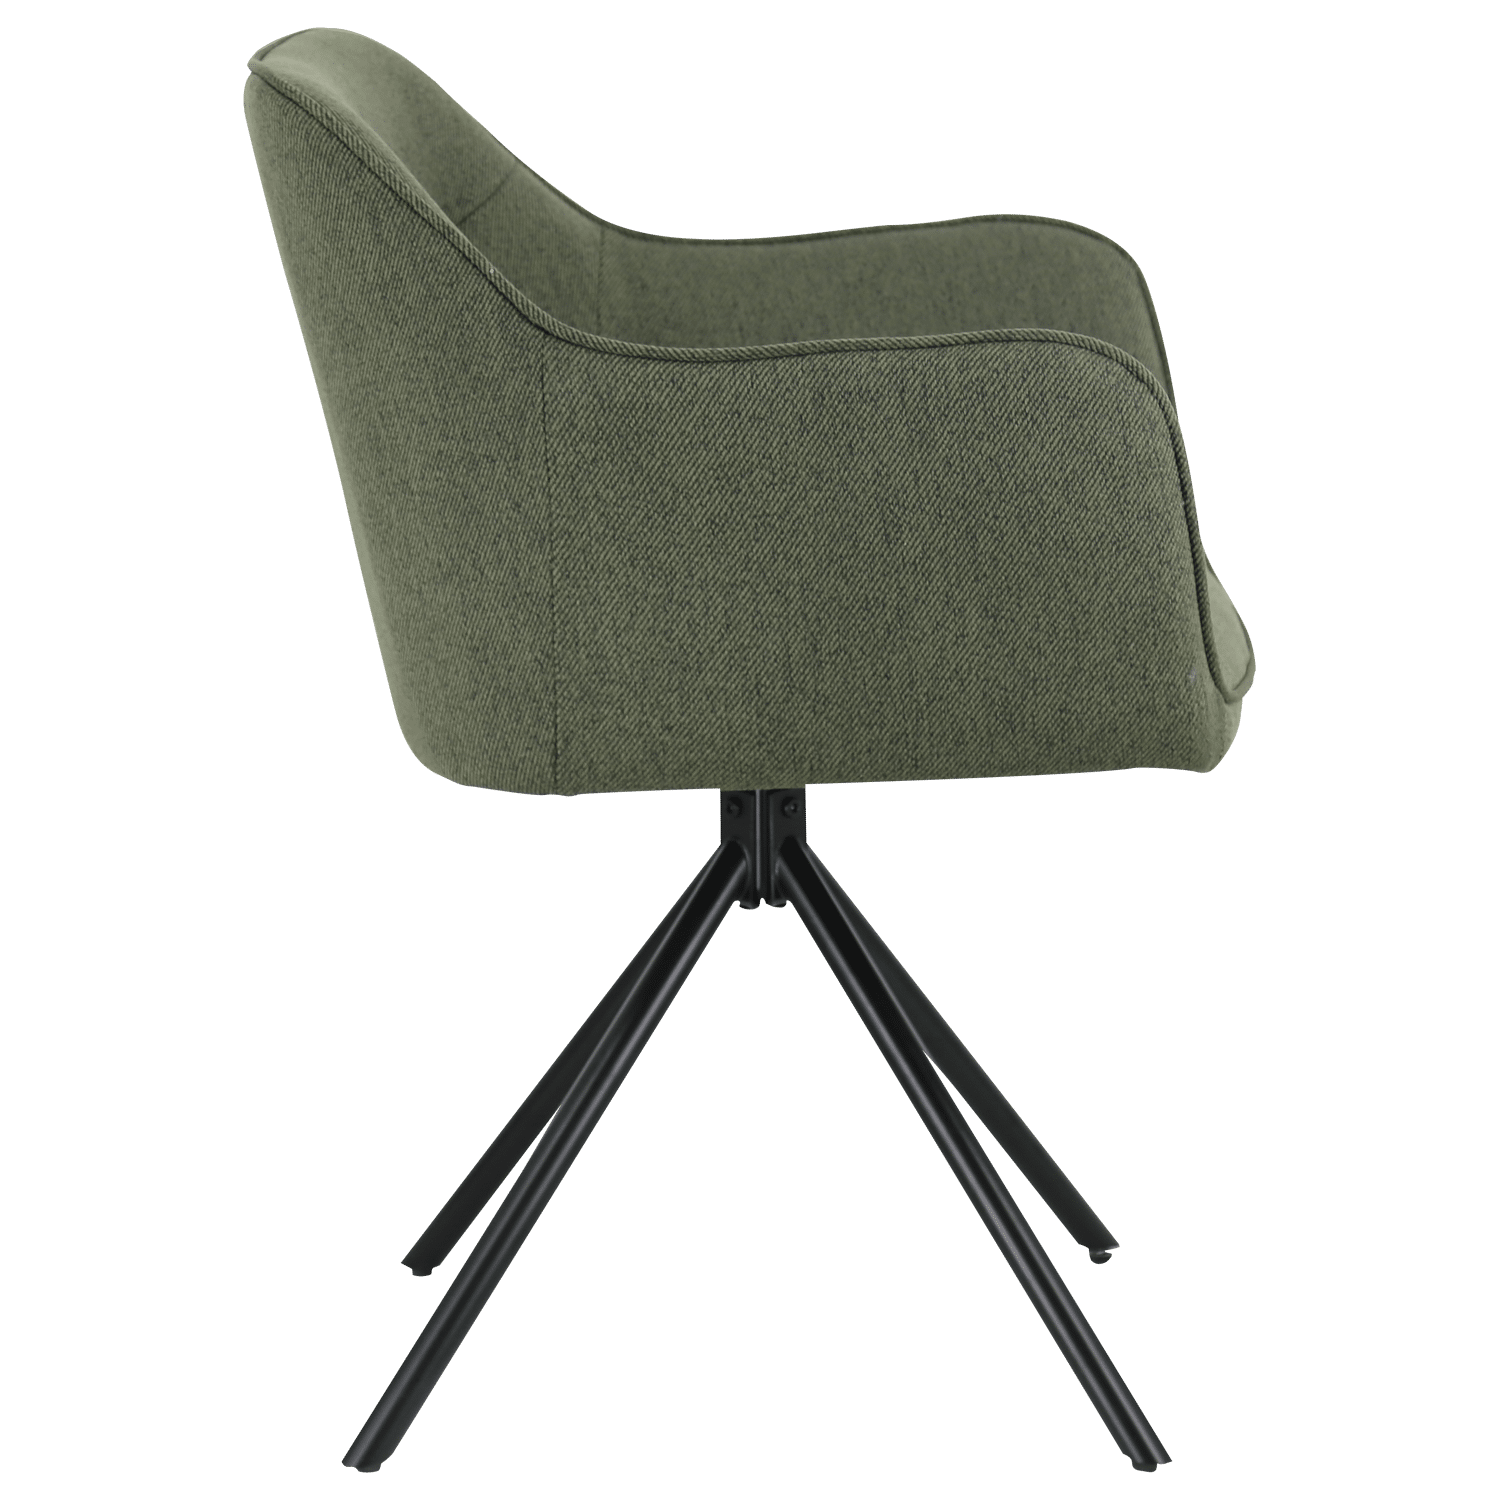 Set van 2 groene stoffen stoelen DANNA